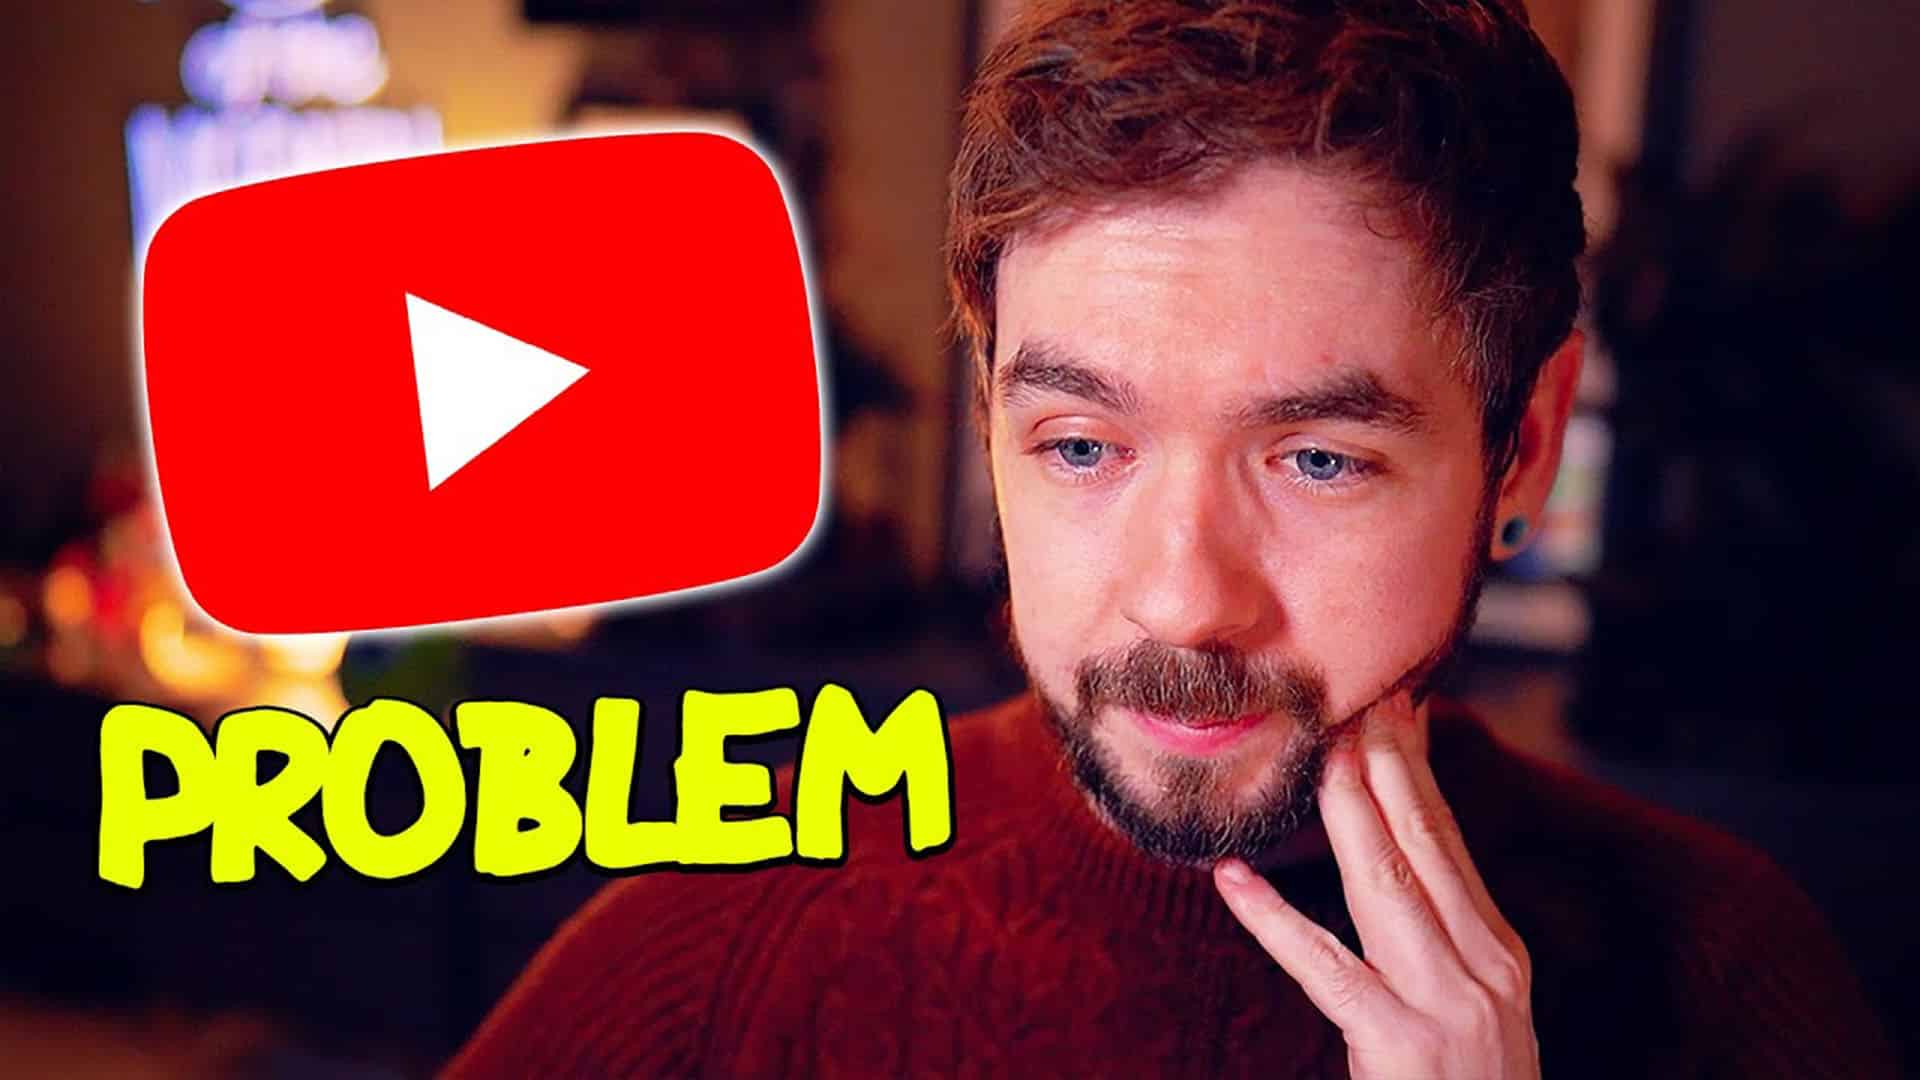 youtube problem